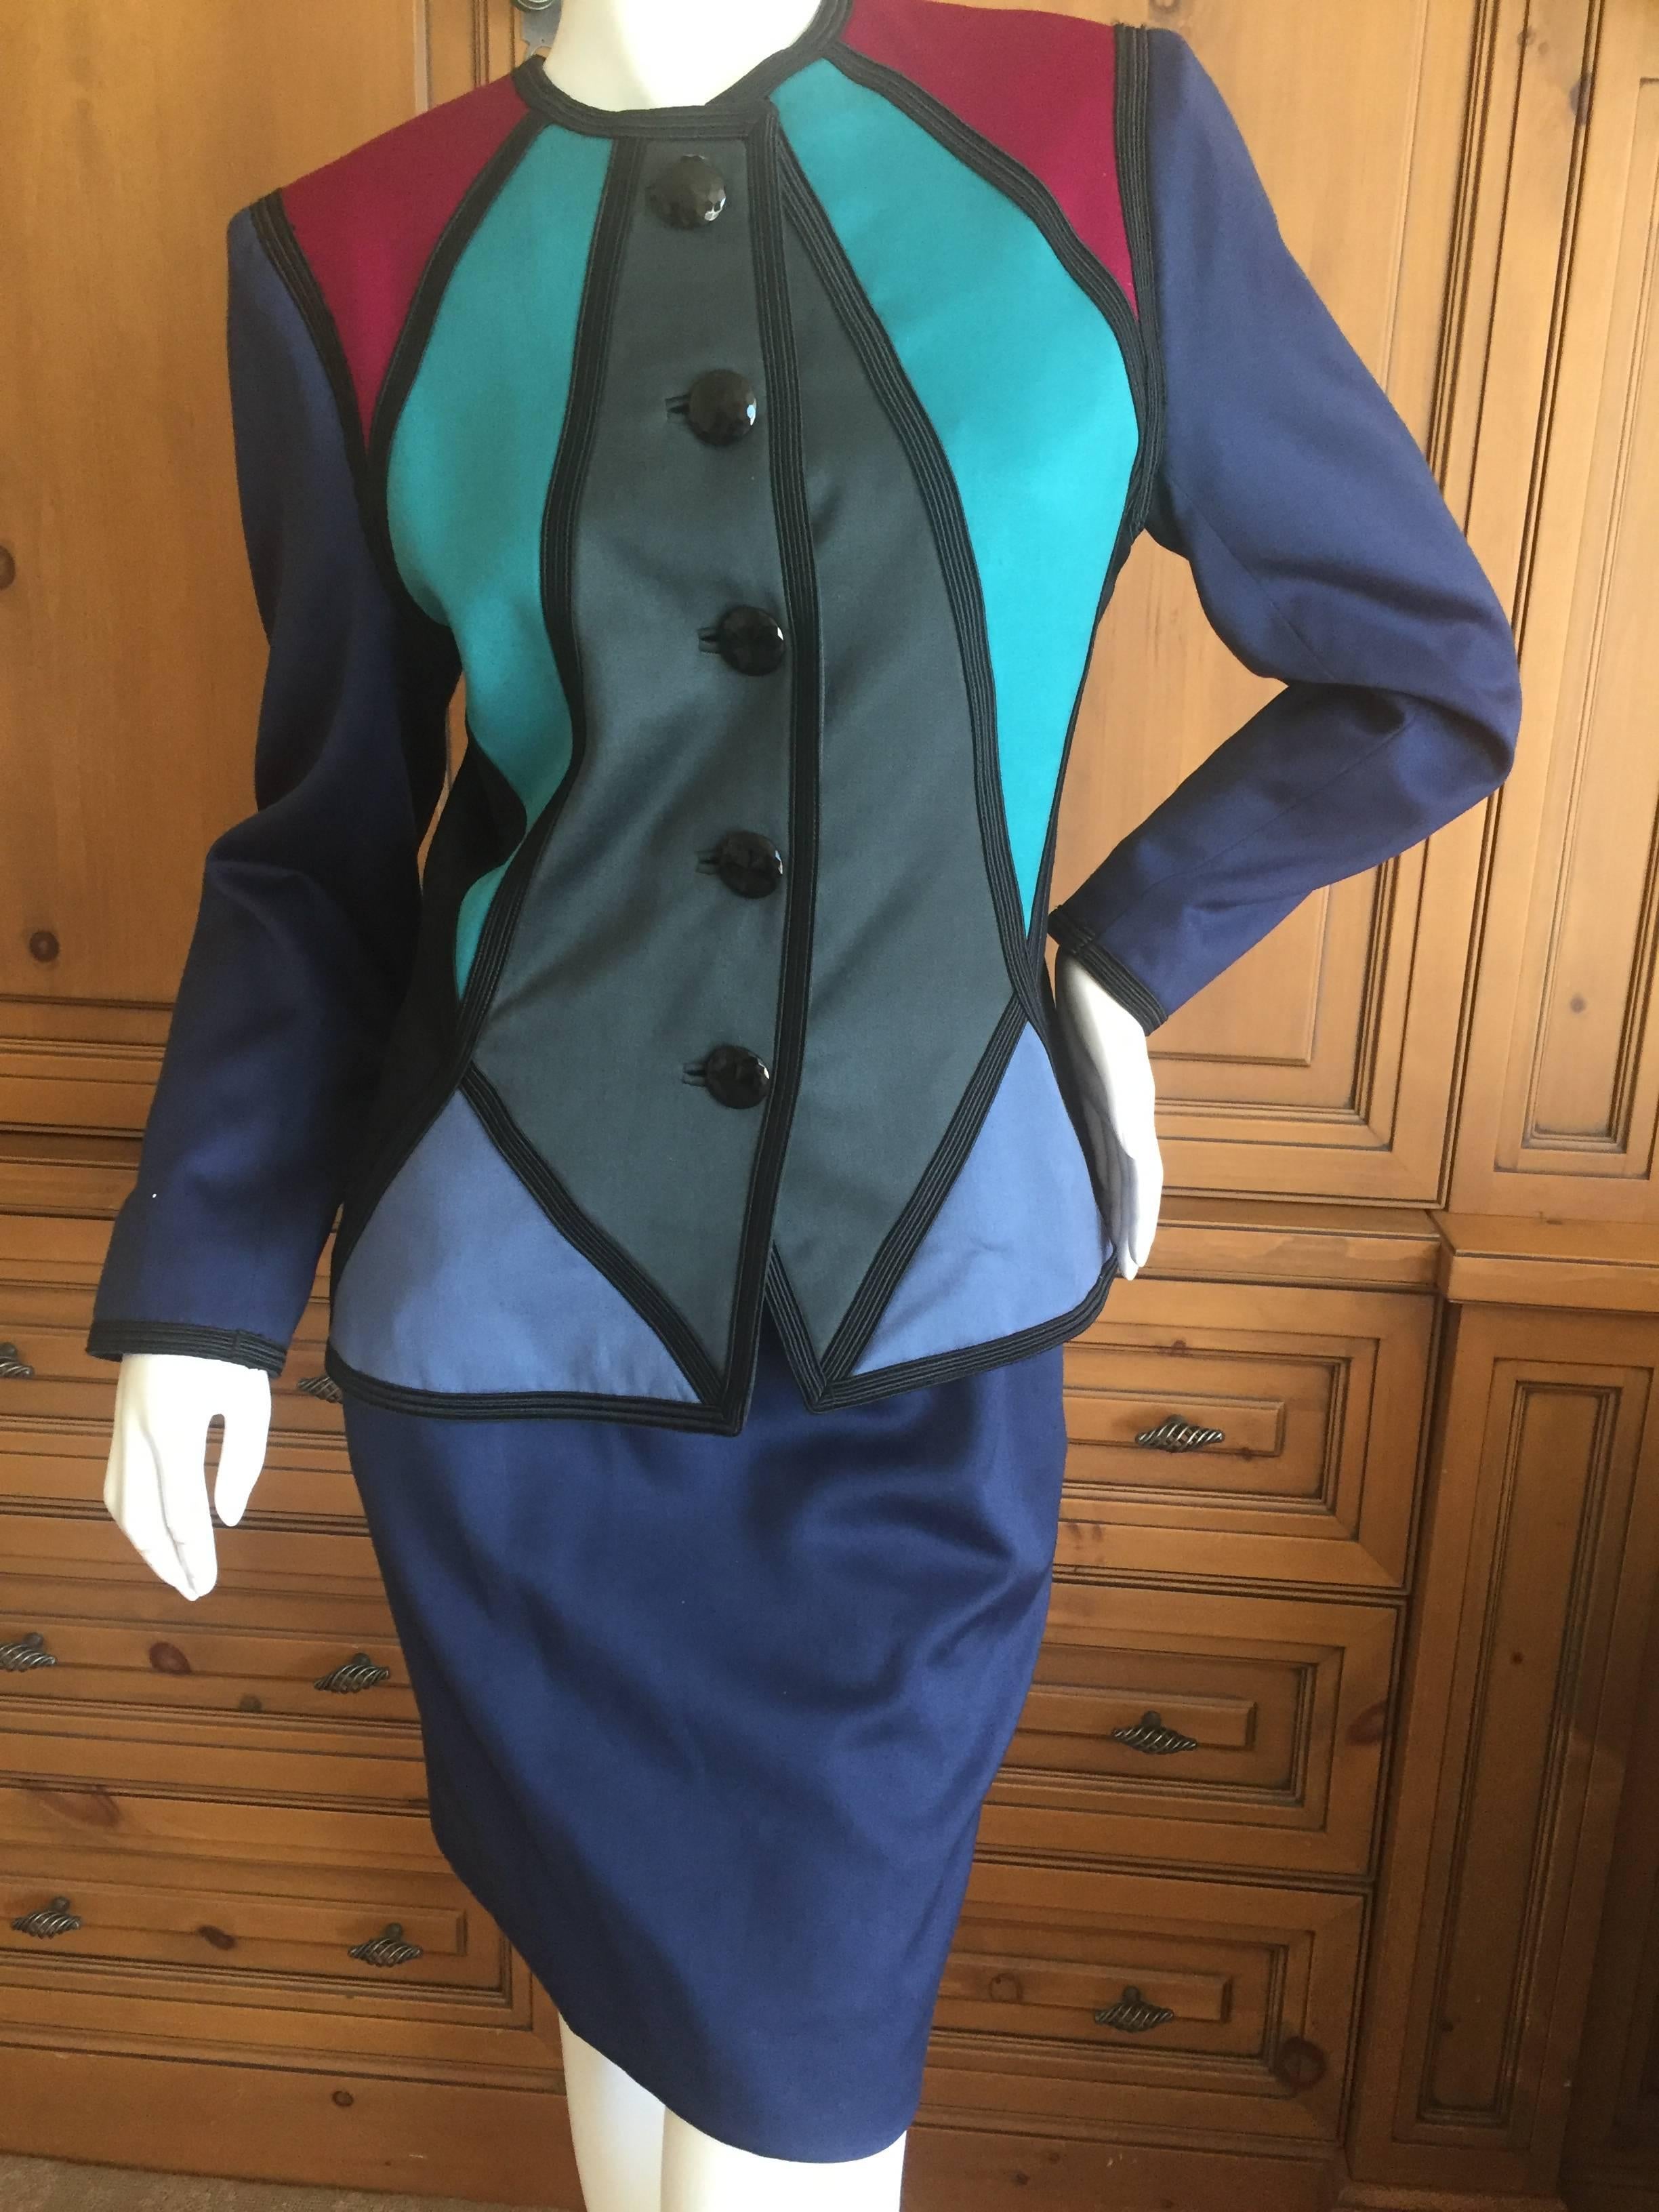 Vintage color block suit from Yves Saint Laurent Rive Gauche.
Very fine pure wool with grossgrain ribbon trim, so pretty.
Size 38
Jacket measurements
Bust 37